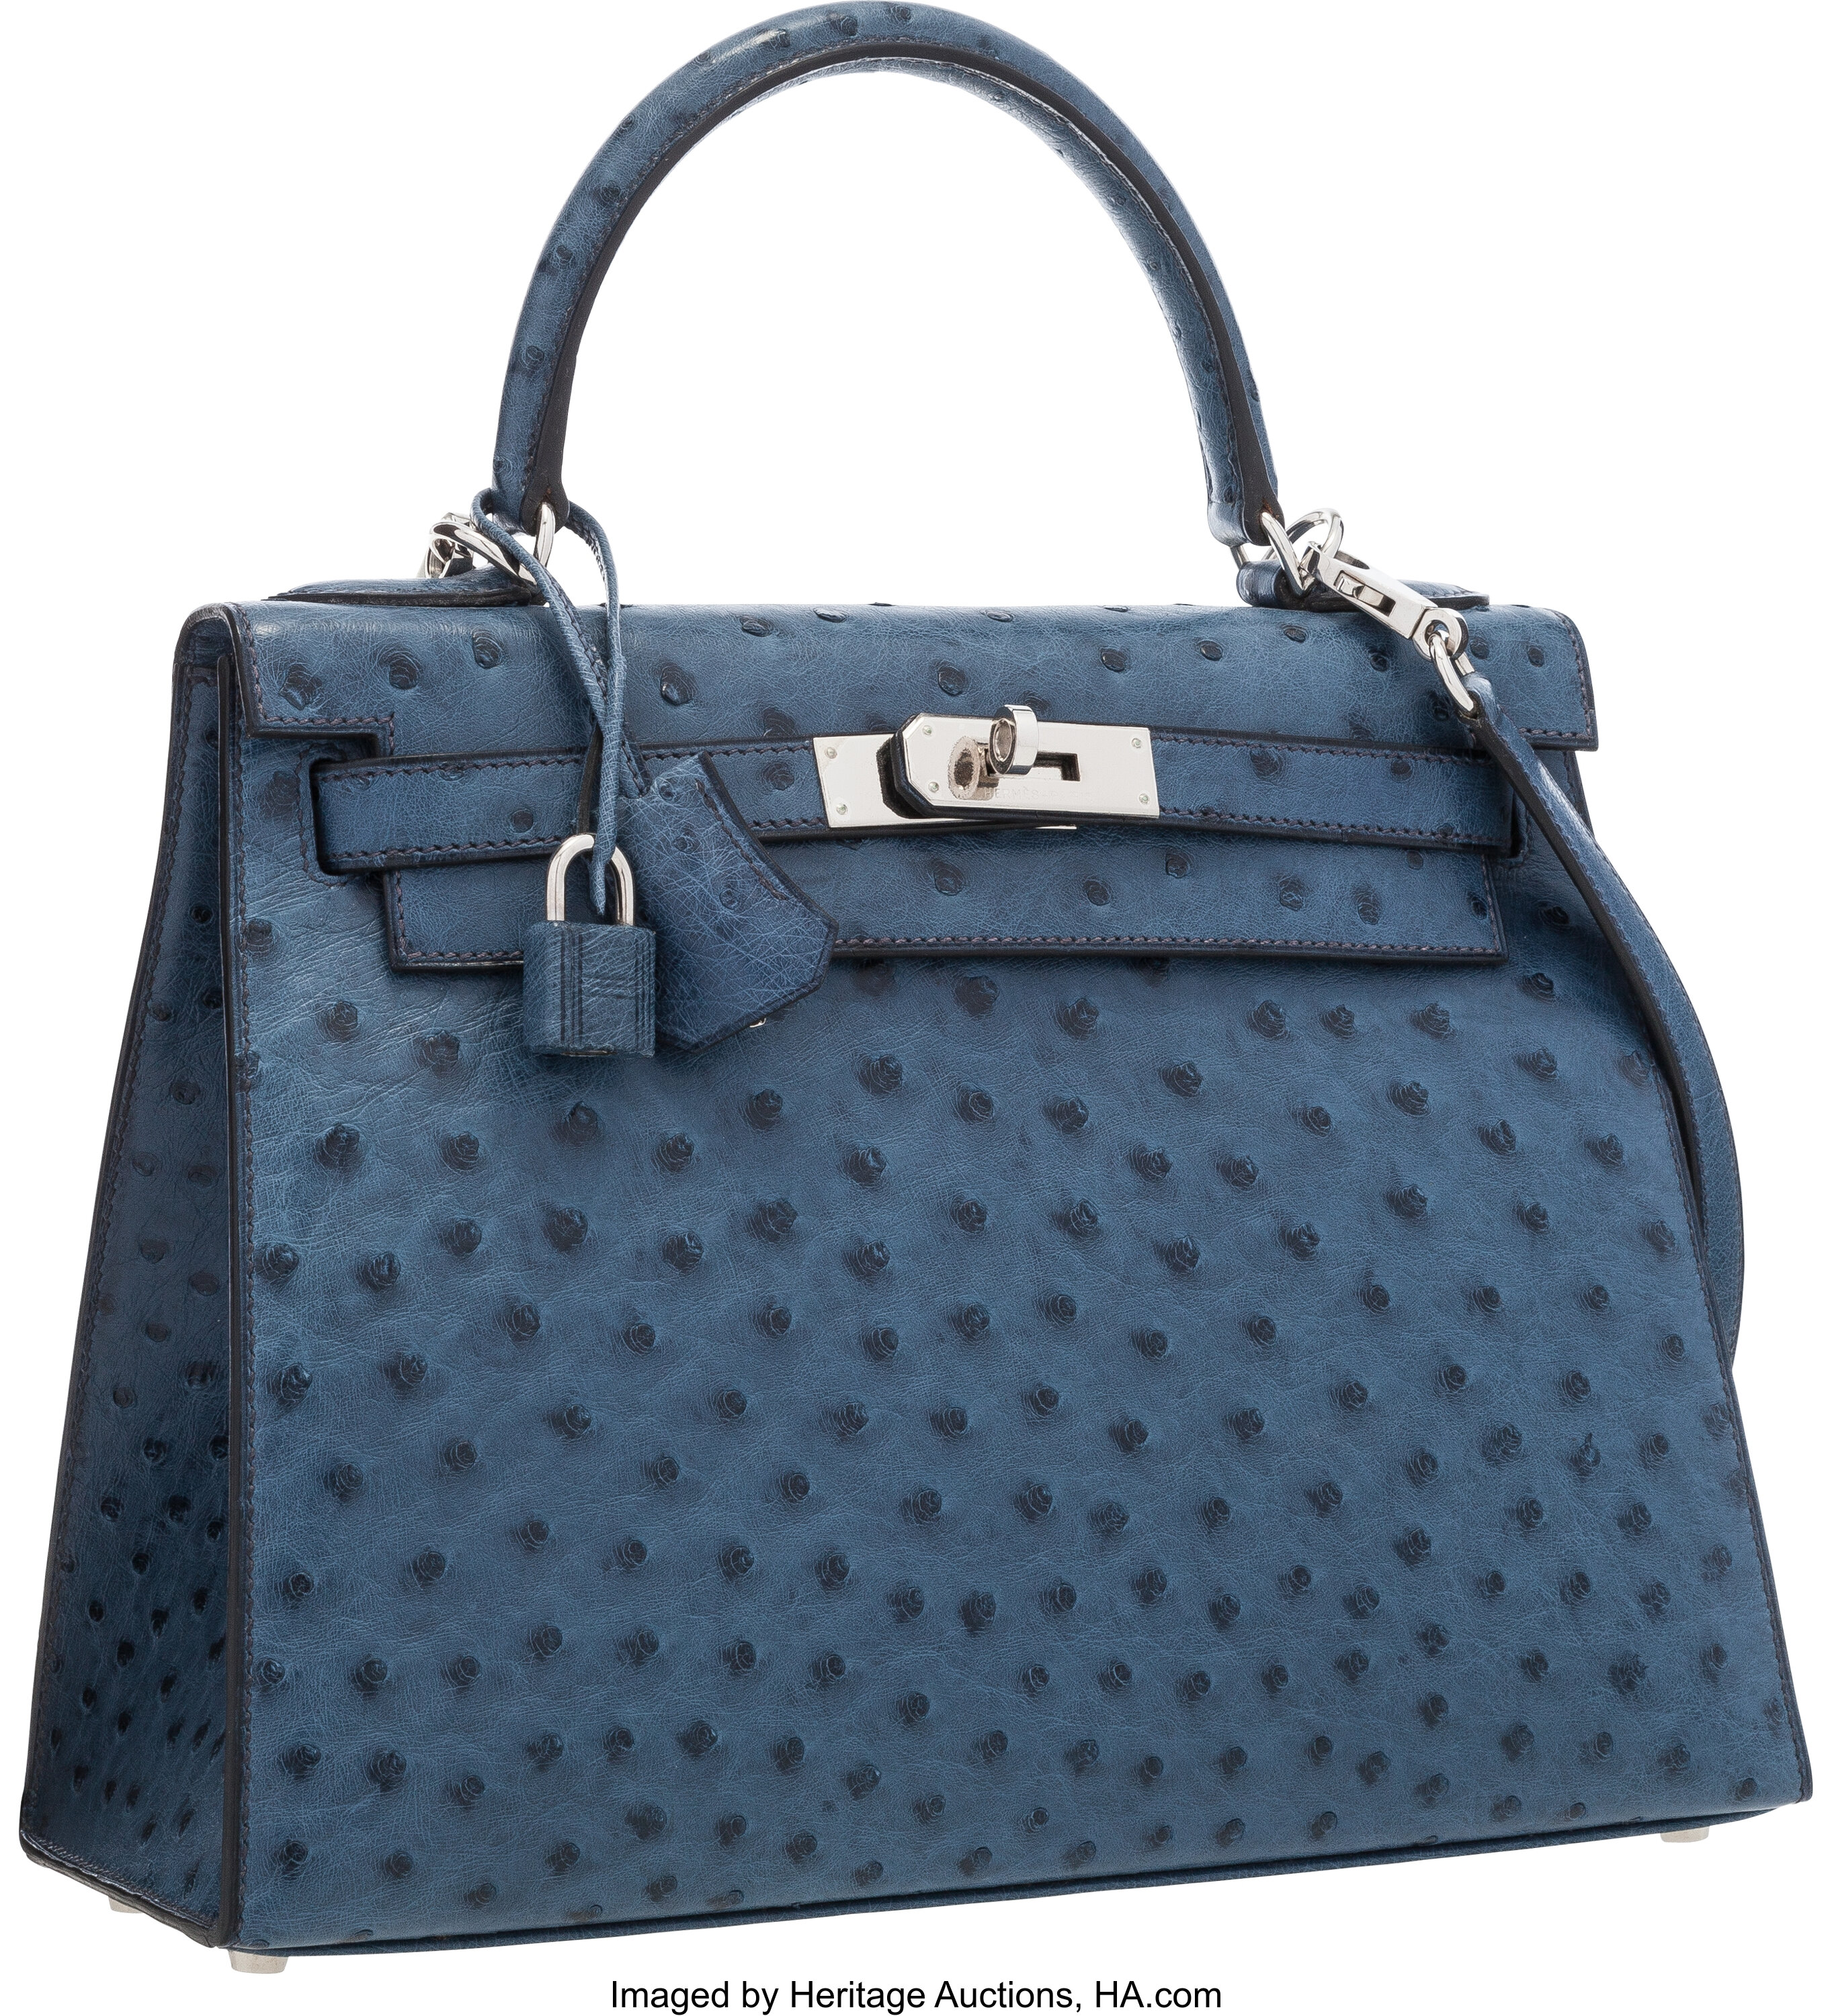 Past auction: Navy blue 29cm Hermes Kelly bag 1960s